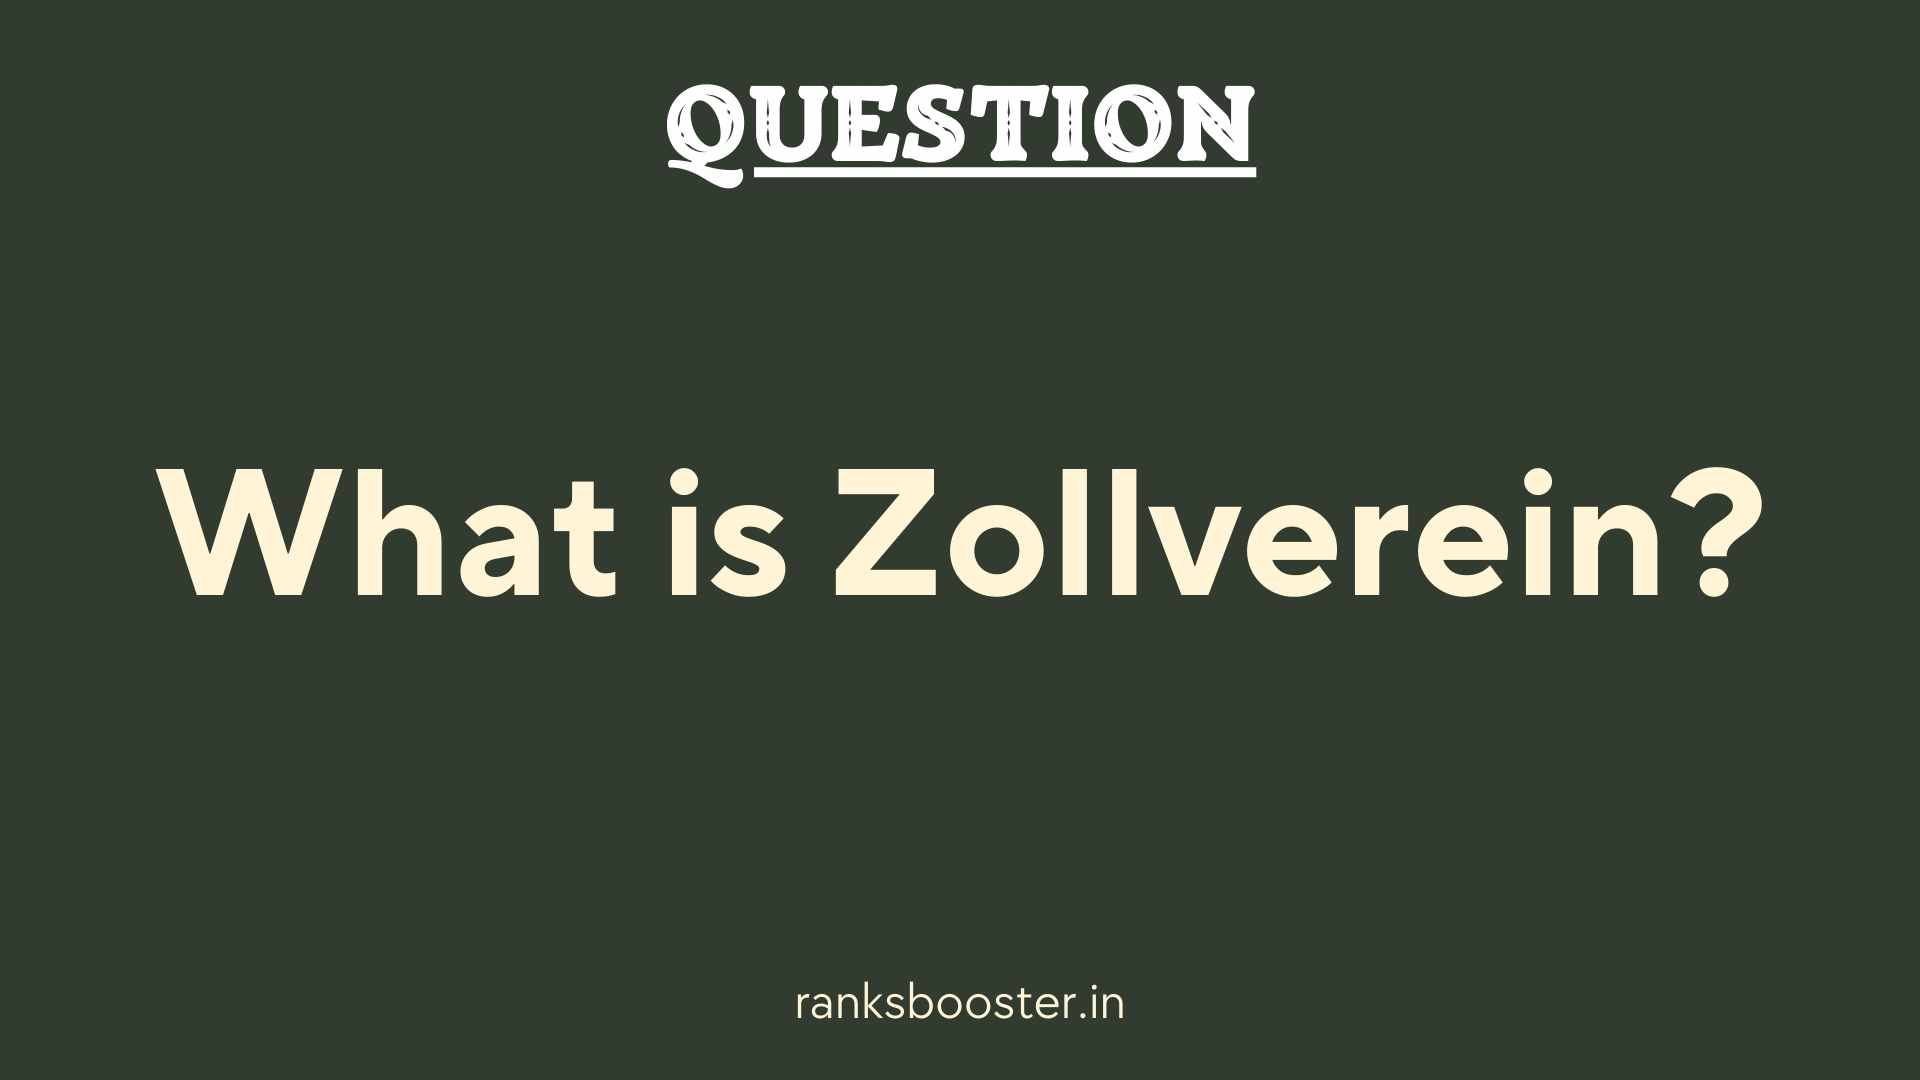 Question: What is Zollverein?